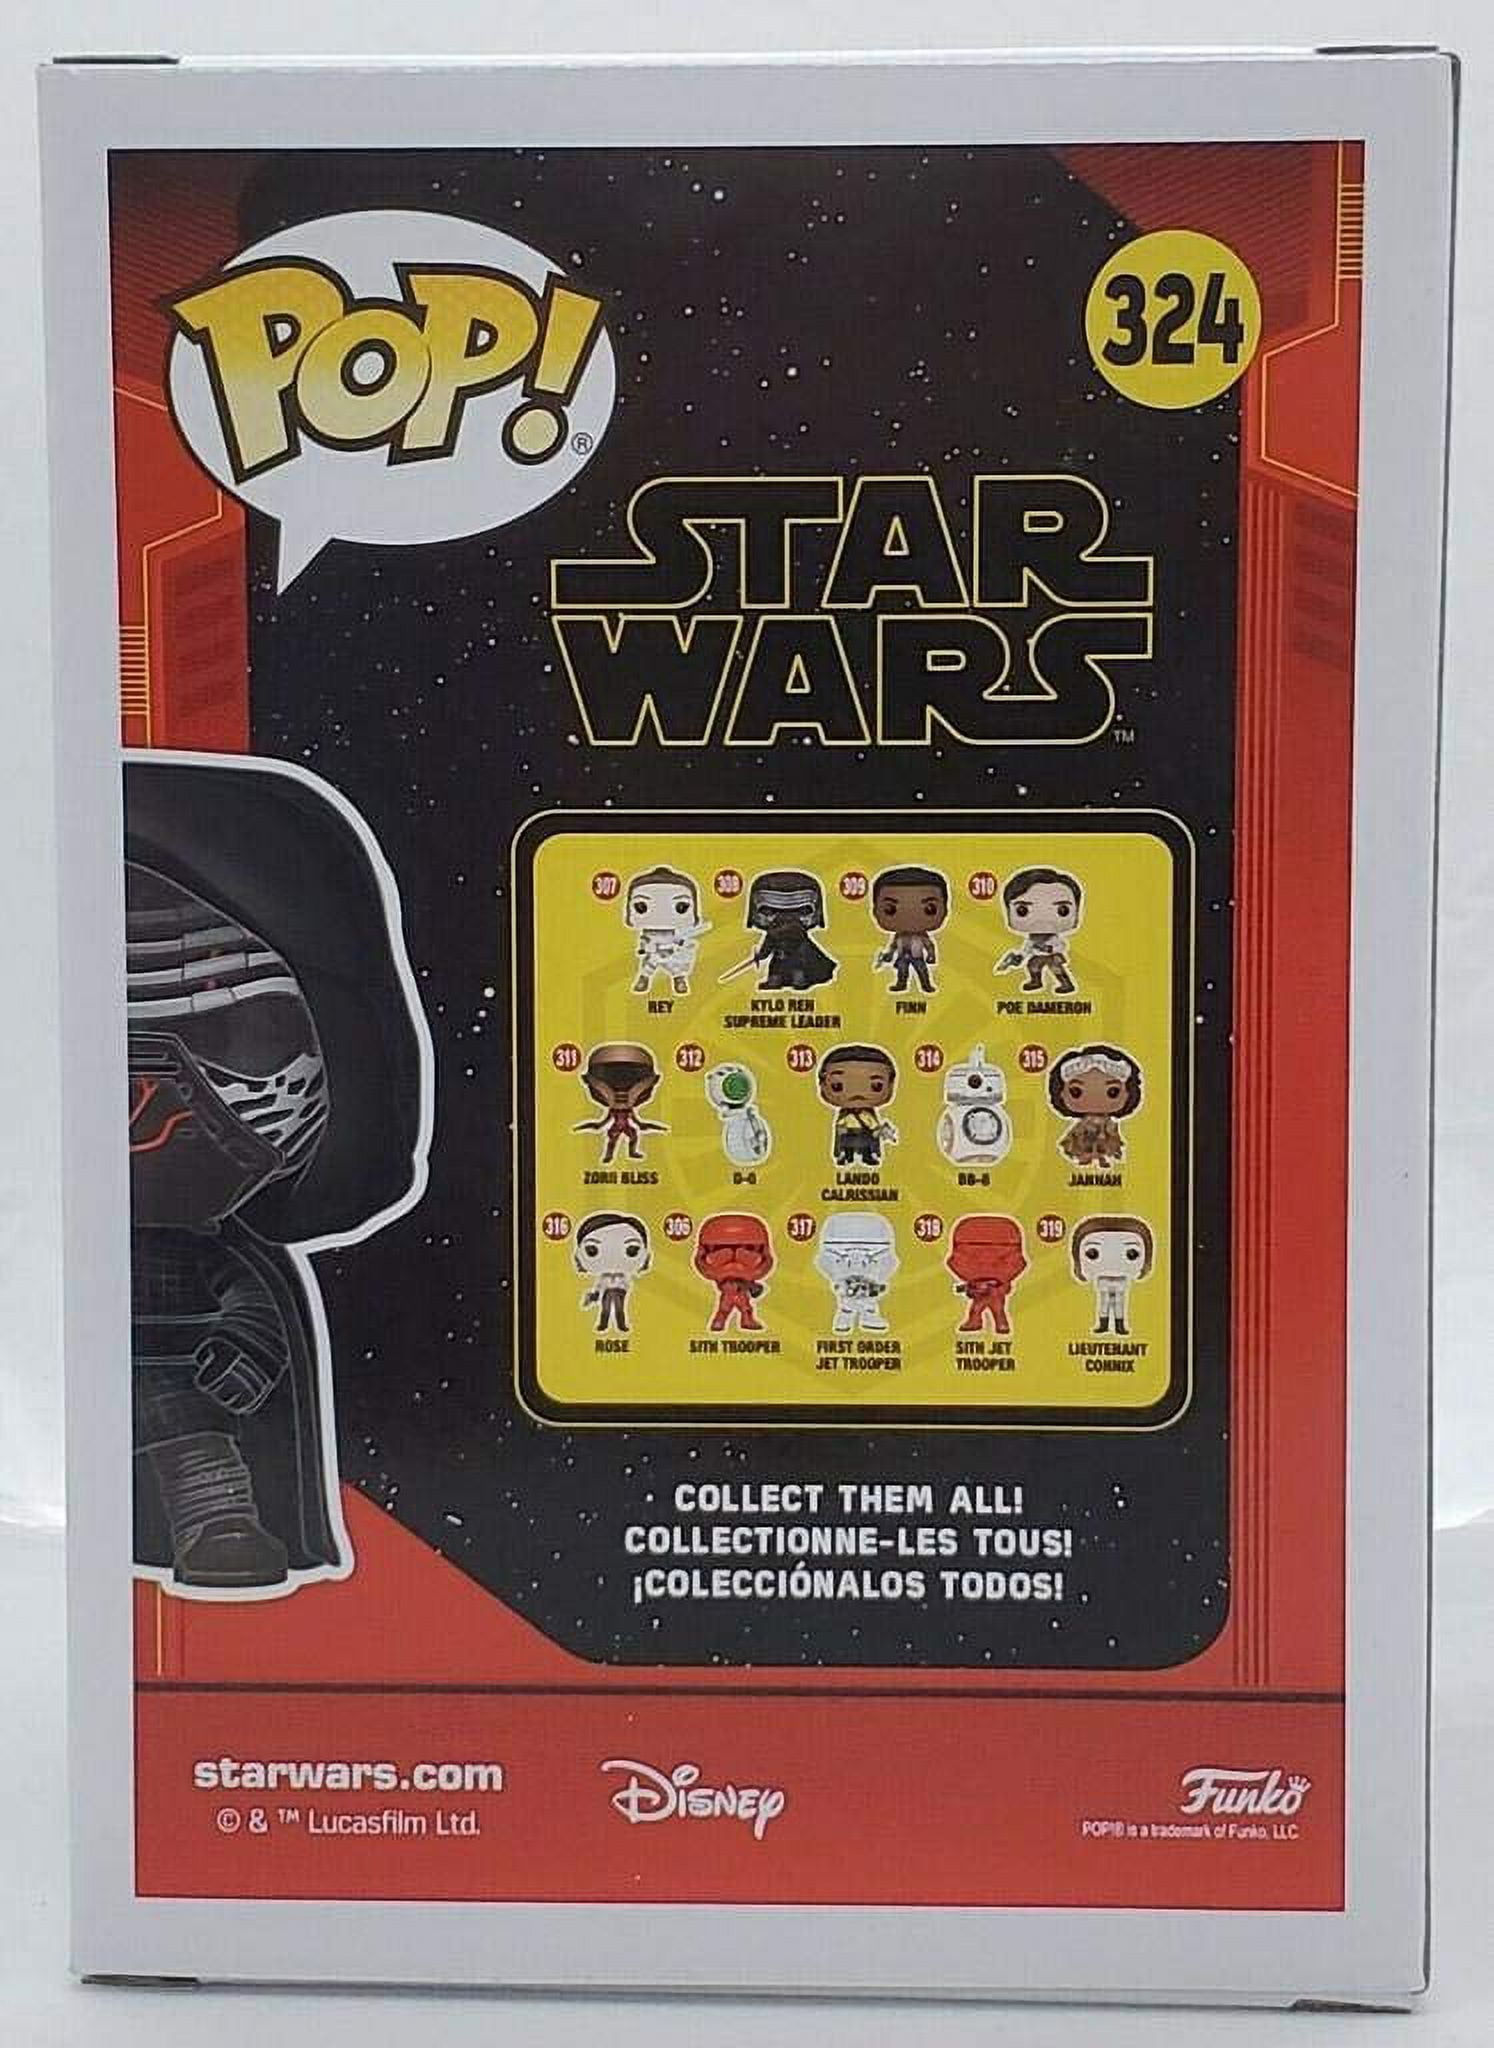 Funko POP! Star Wars Collectors Box: Kylo Ren (Supreme Leader) POP